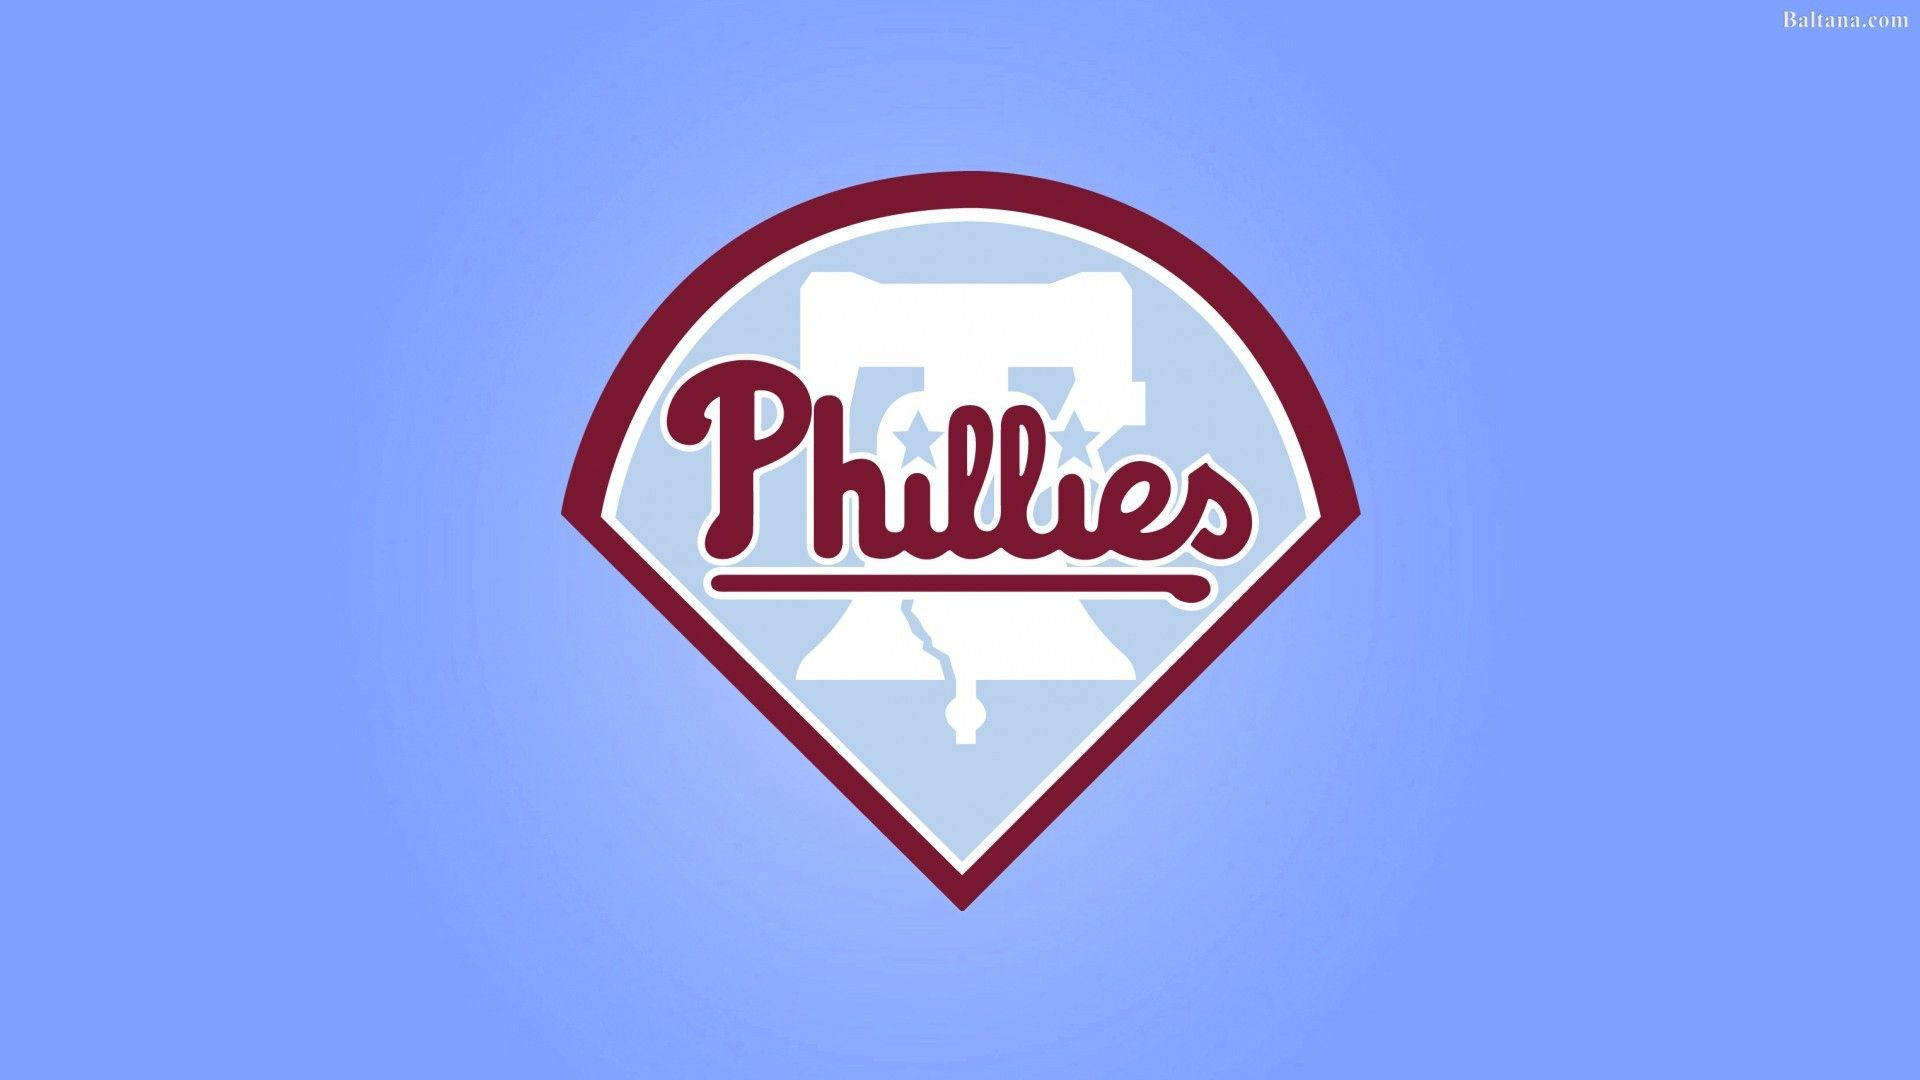 Phillies iPhone Wallpapers  Top Free Phillies iPhone Backgrounds   WallpaperAccess  Phillies Baseball wallpaper Philadelphia phillies